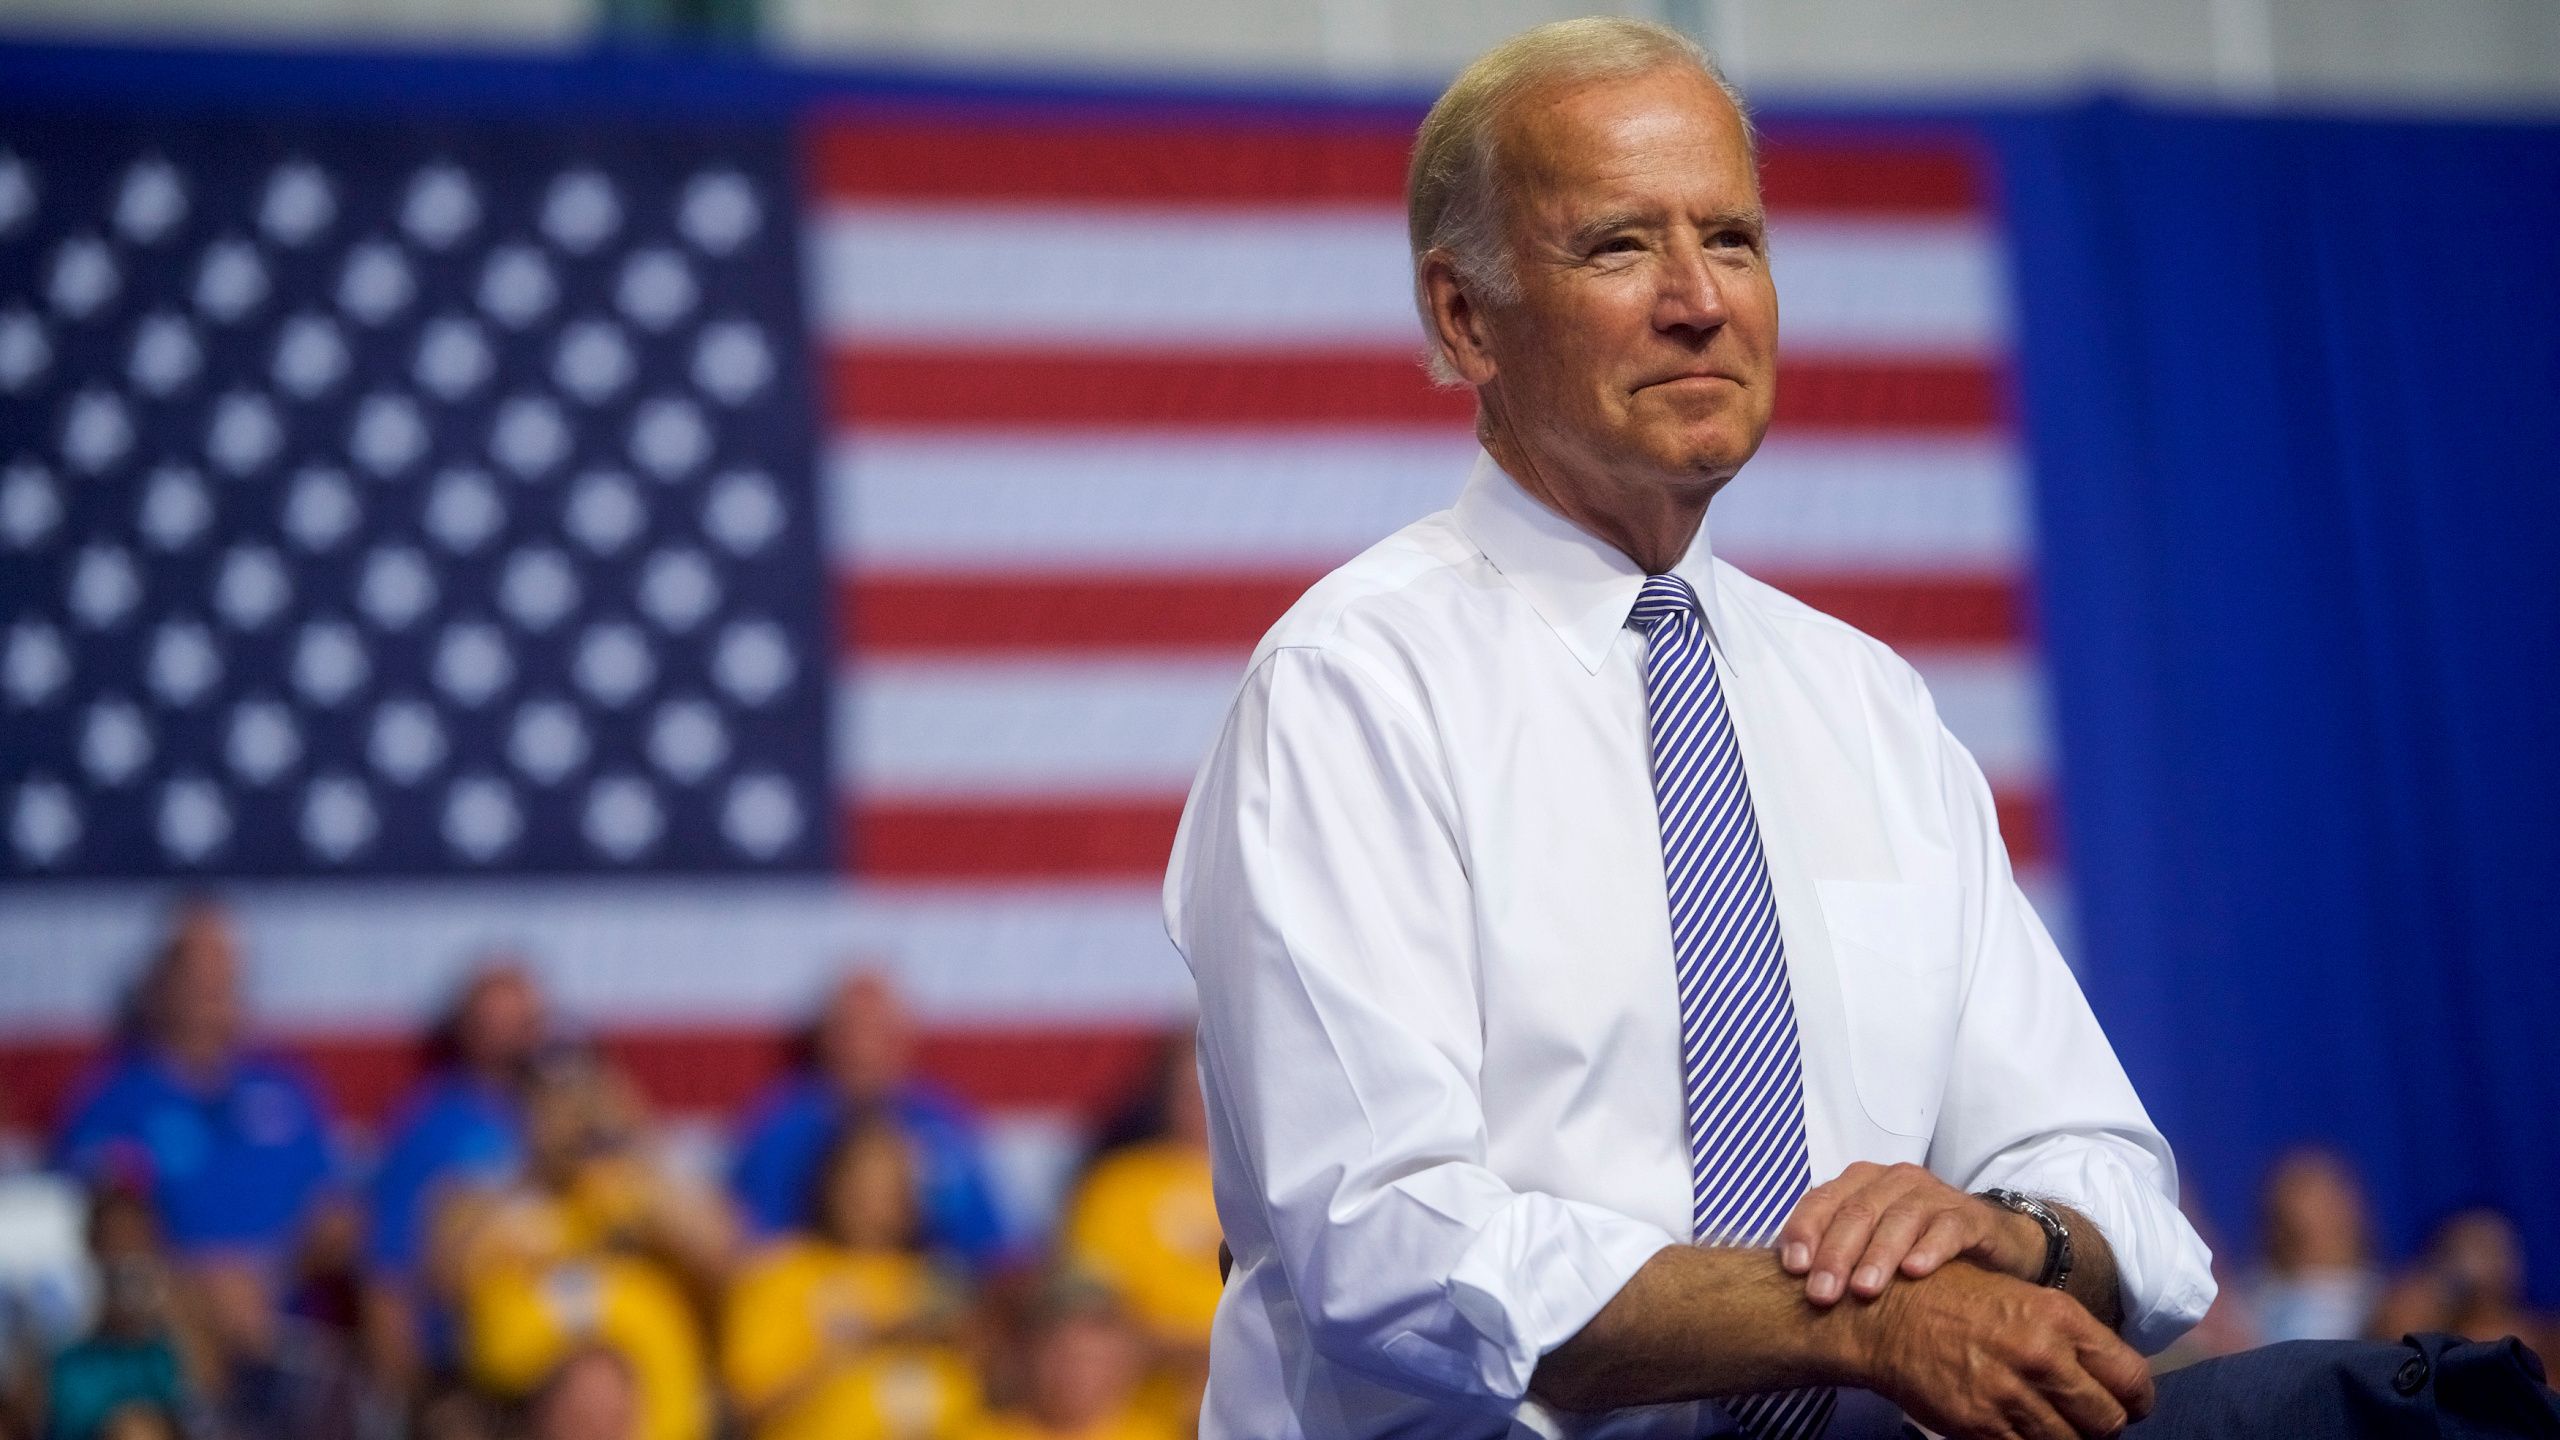 Details released ahead of Vice President Joe Biden's visit to